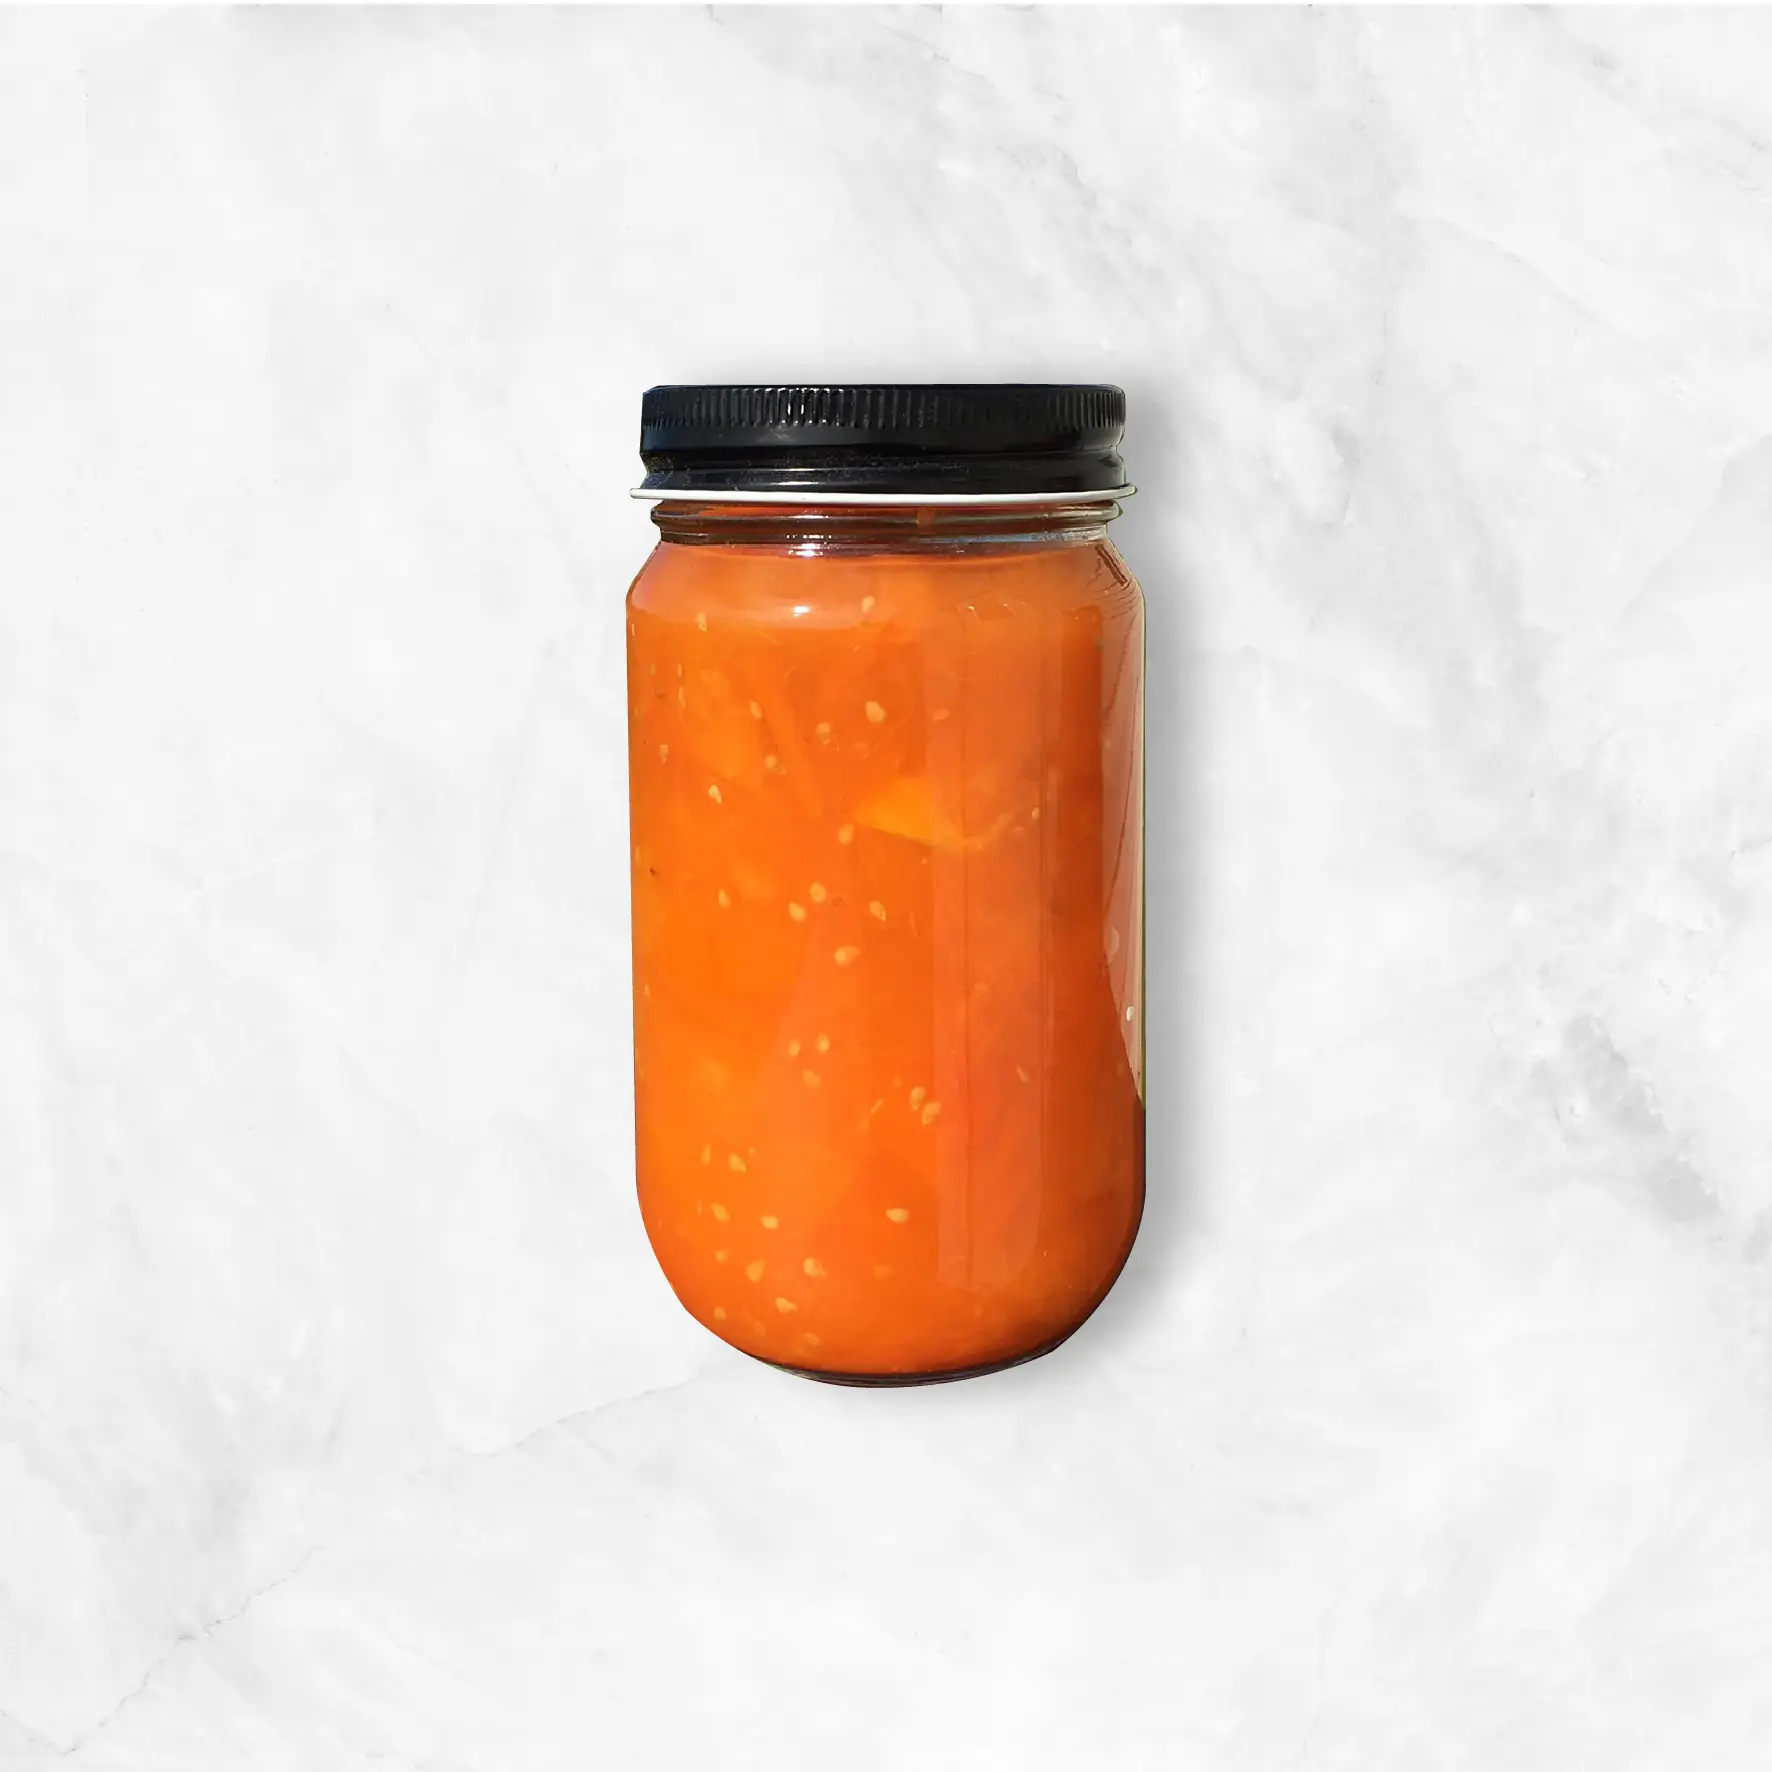 Amana Orange Tomatoes Jar